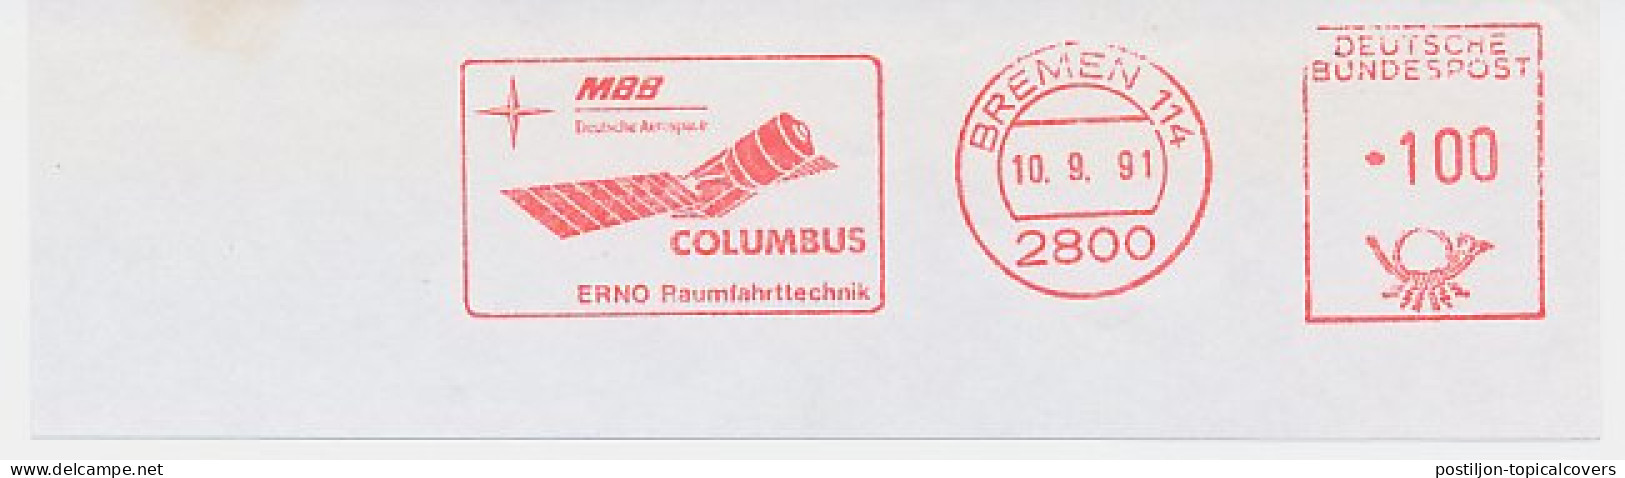 Meter Cut Germany 1991 Satellite Columbus - MBB - ERNO - Astronomy